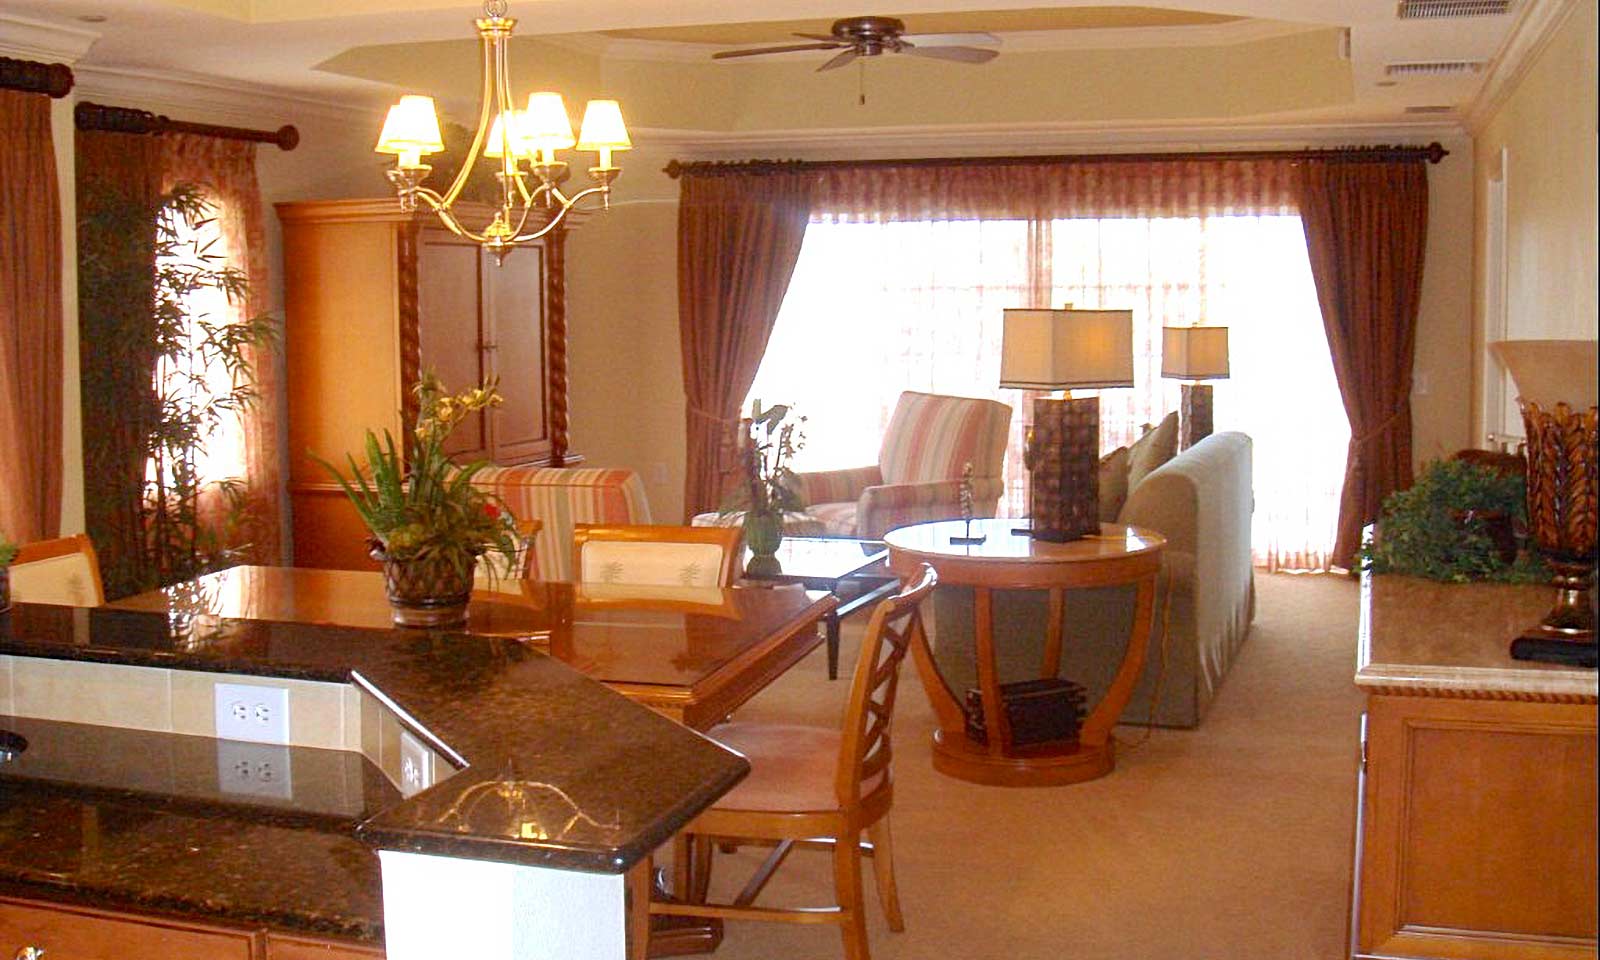 [amenities:Living-Room:1] Living Room